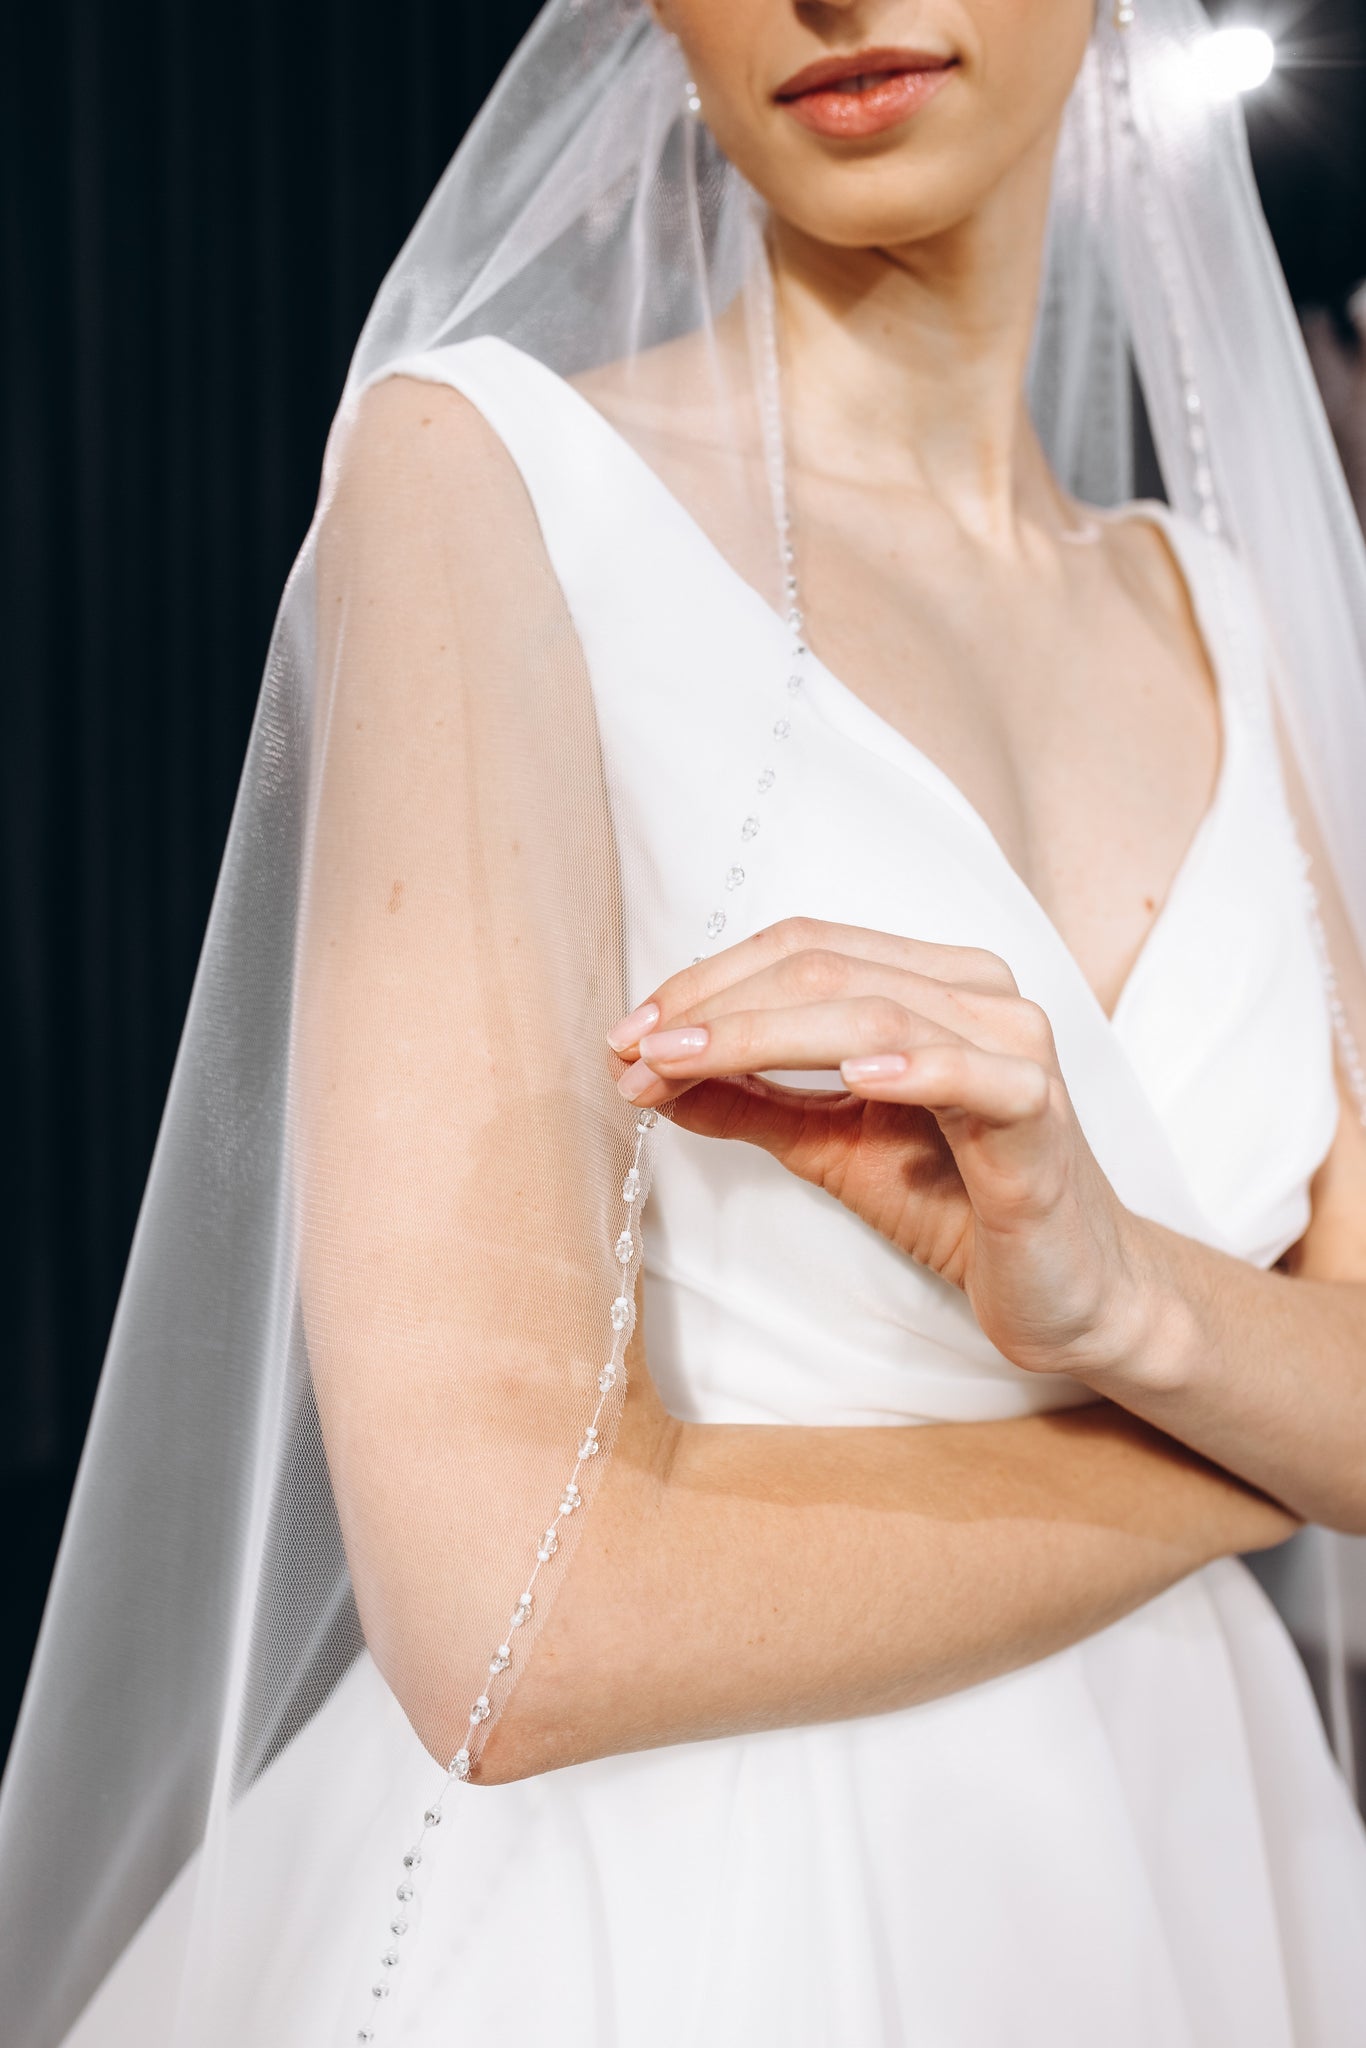 Beaded edge wedding veil